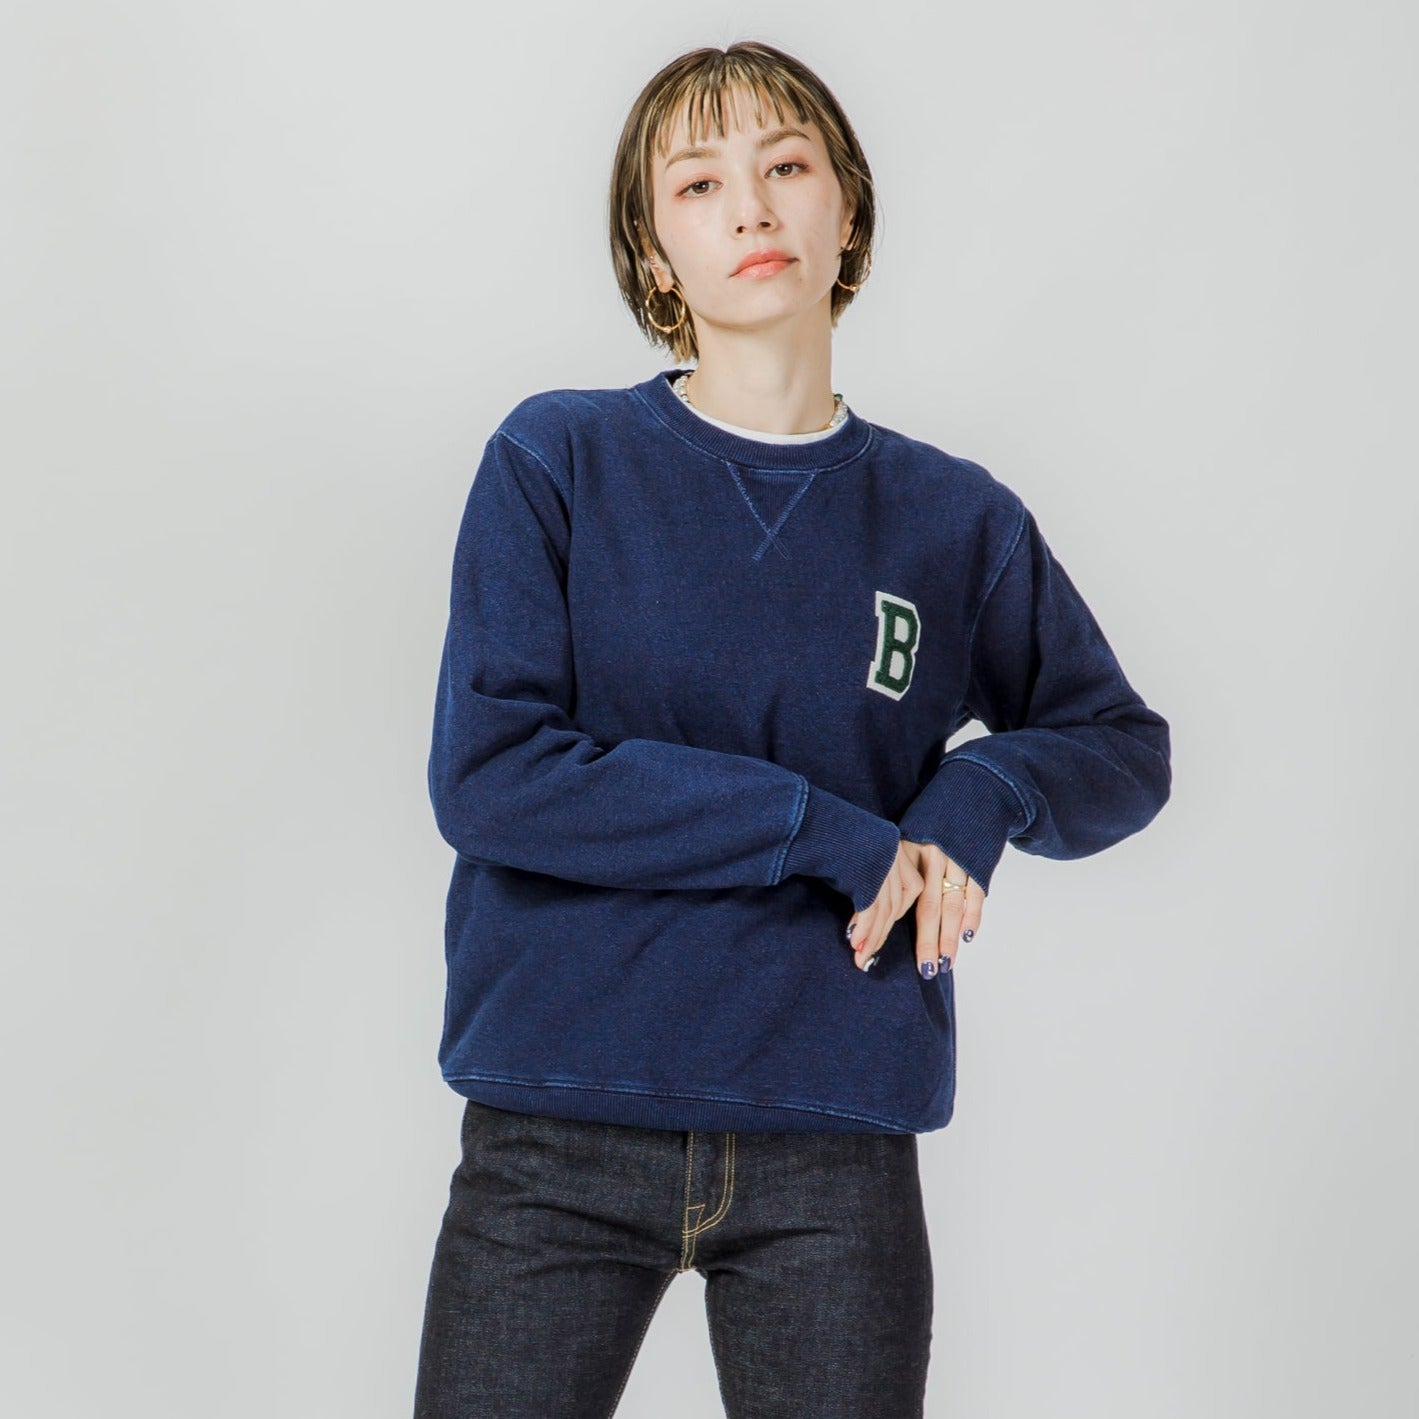 T-03 indigo sweatshirt B – EL Canek jeanslab